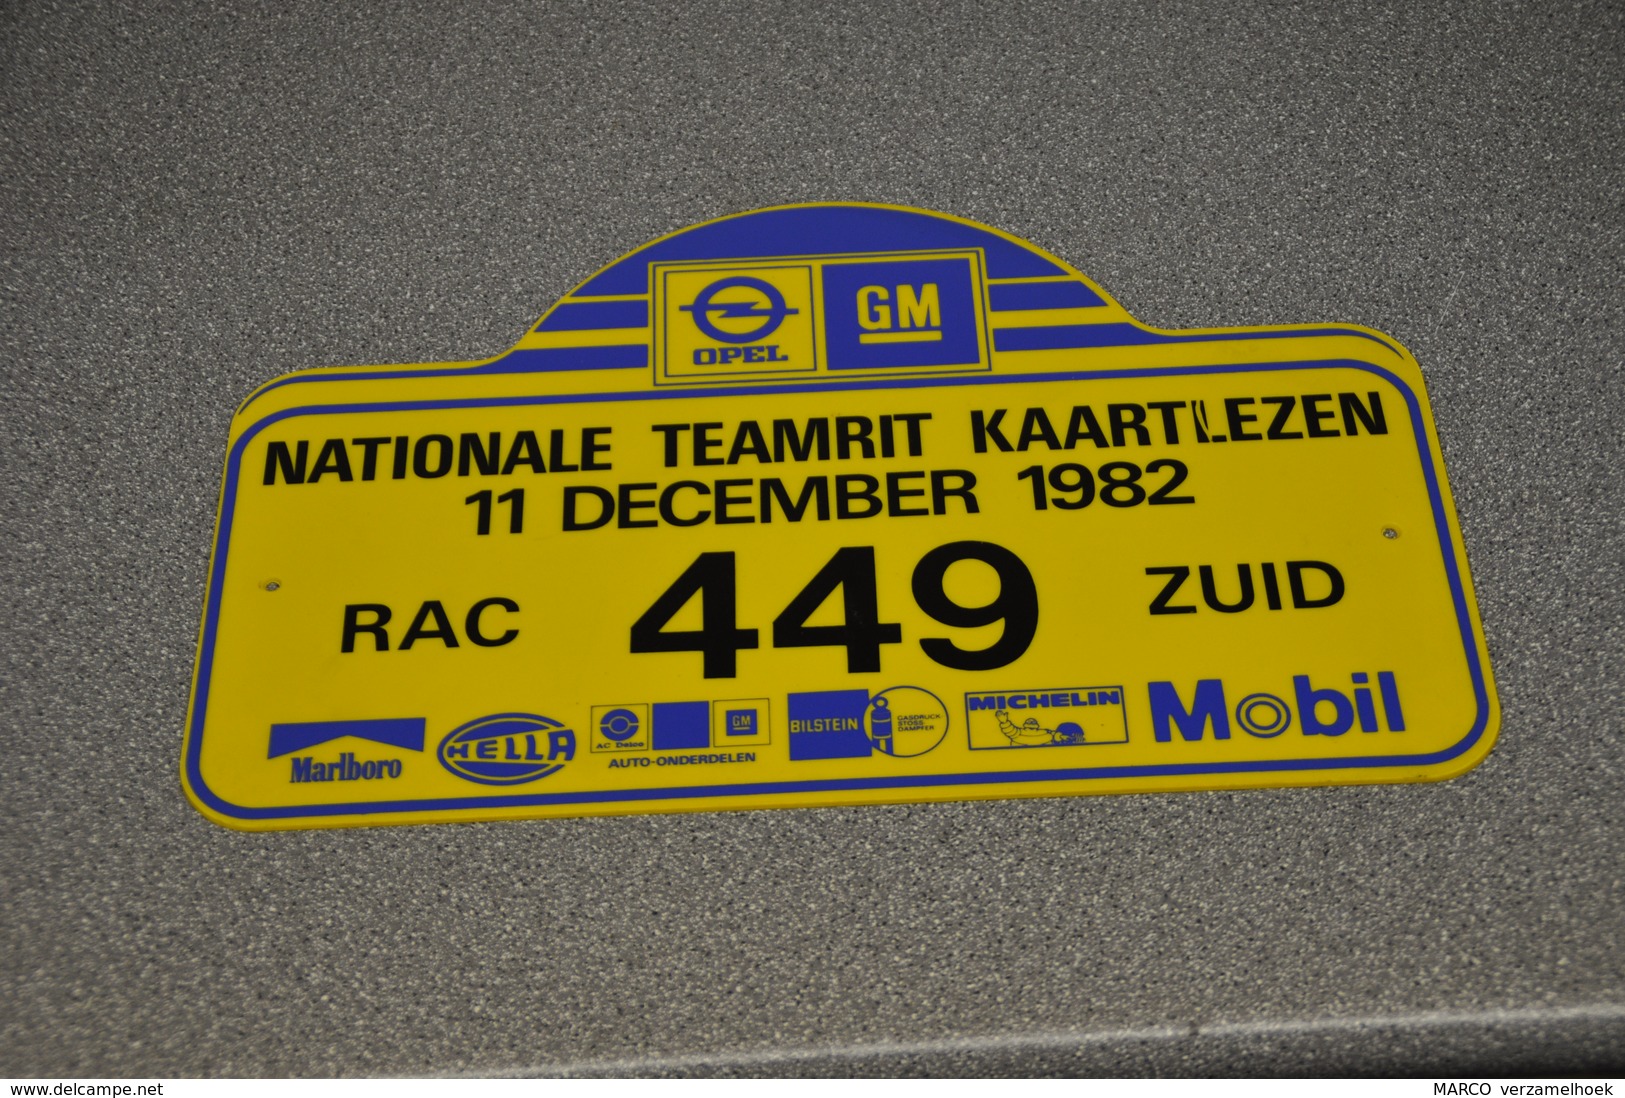 Rally Plaat-rallye Plaque Plastic: Nat. Teamrit 1982 RAC-zuid Opel-GM-marlboro-hella-michelin-mobil - Rallyeschilder